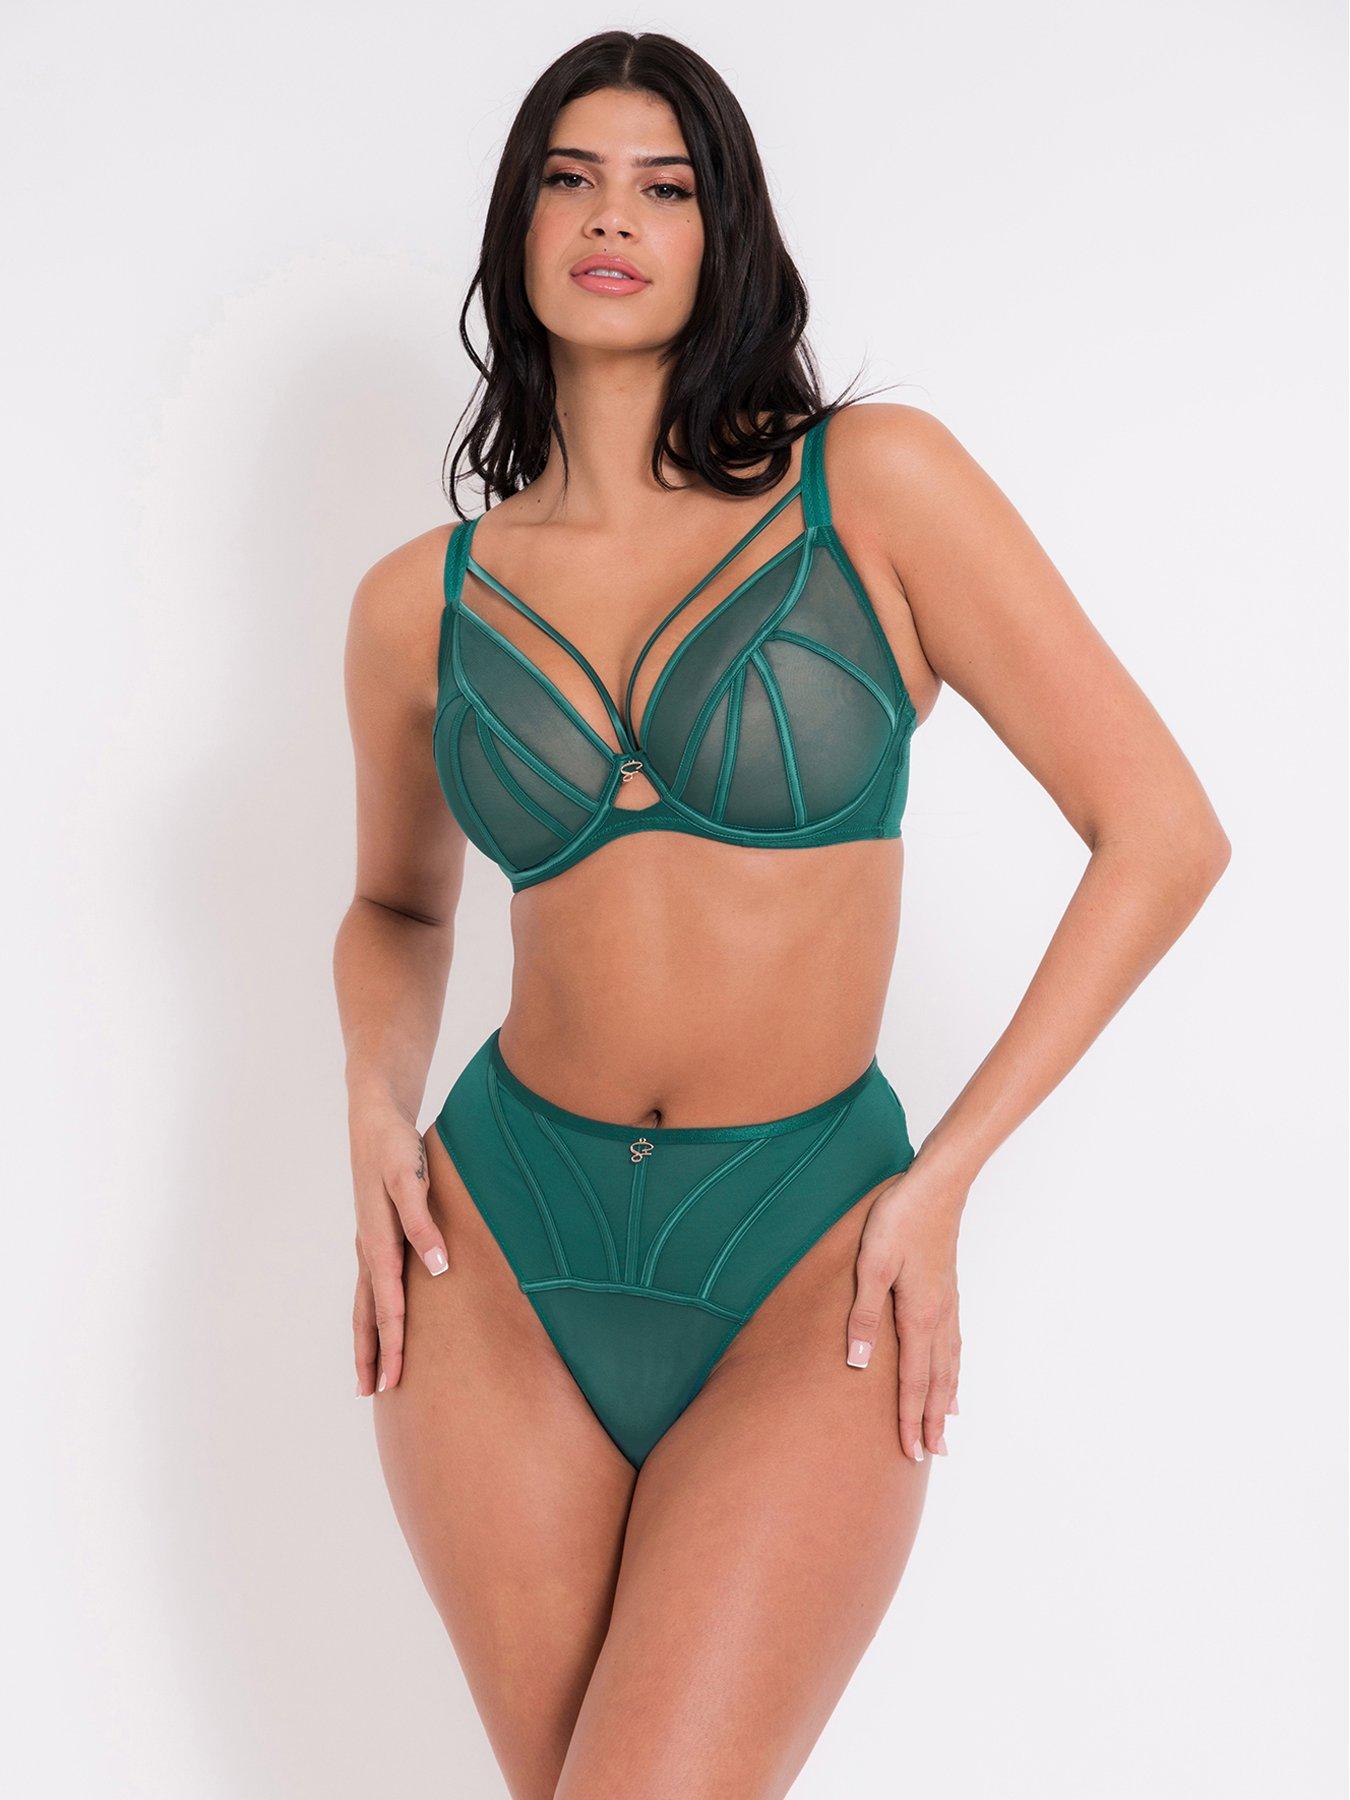 Sexy lingerie Women Neon Green Female Underwear Intimate Bra and